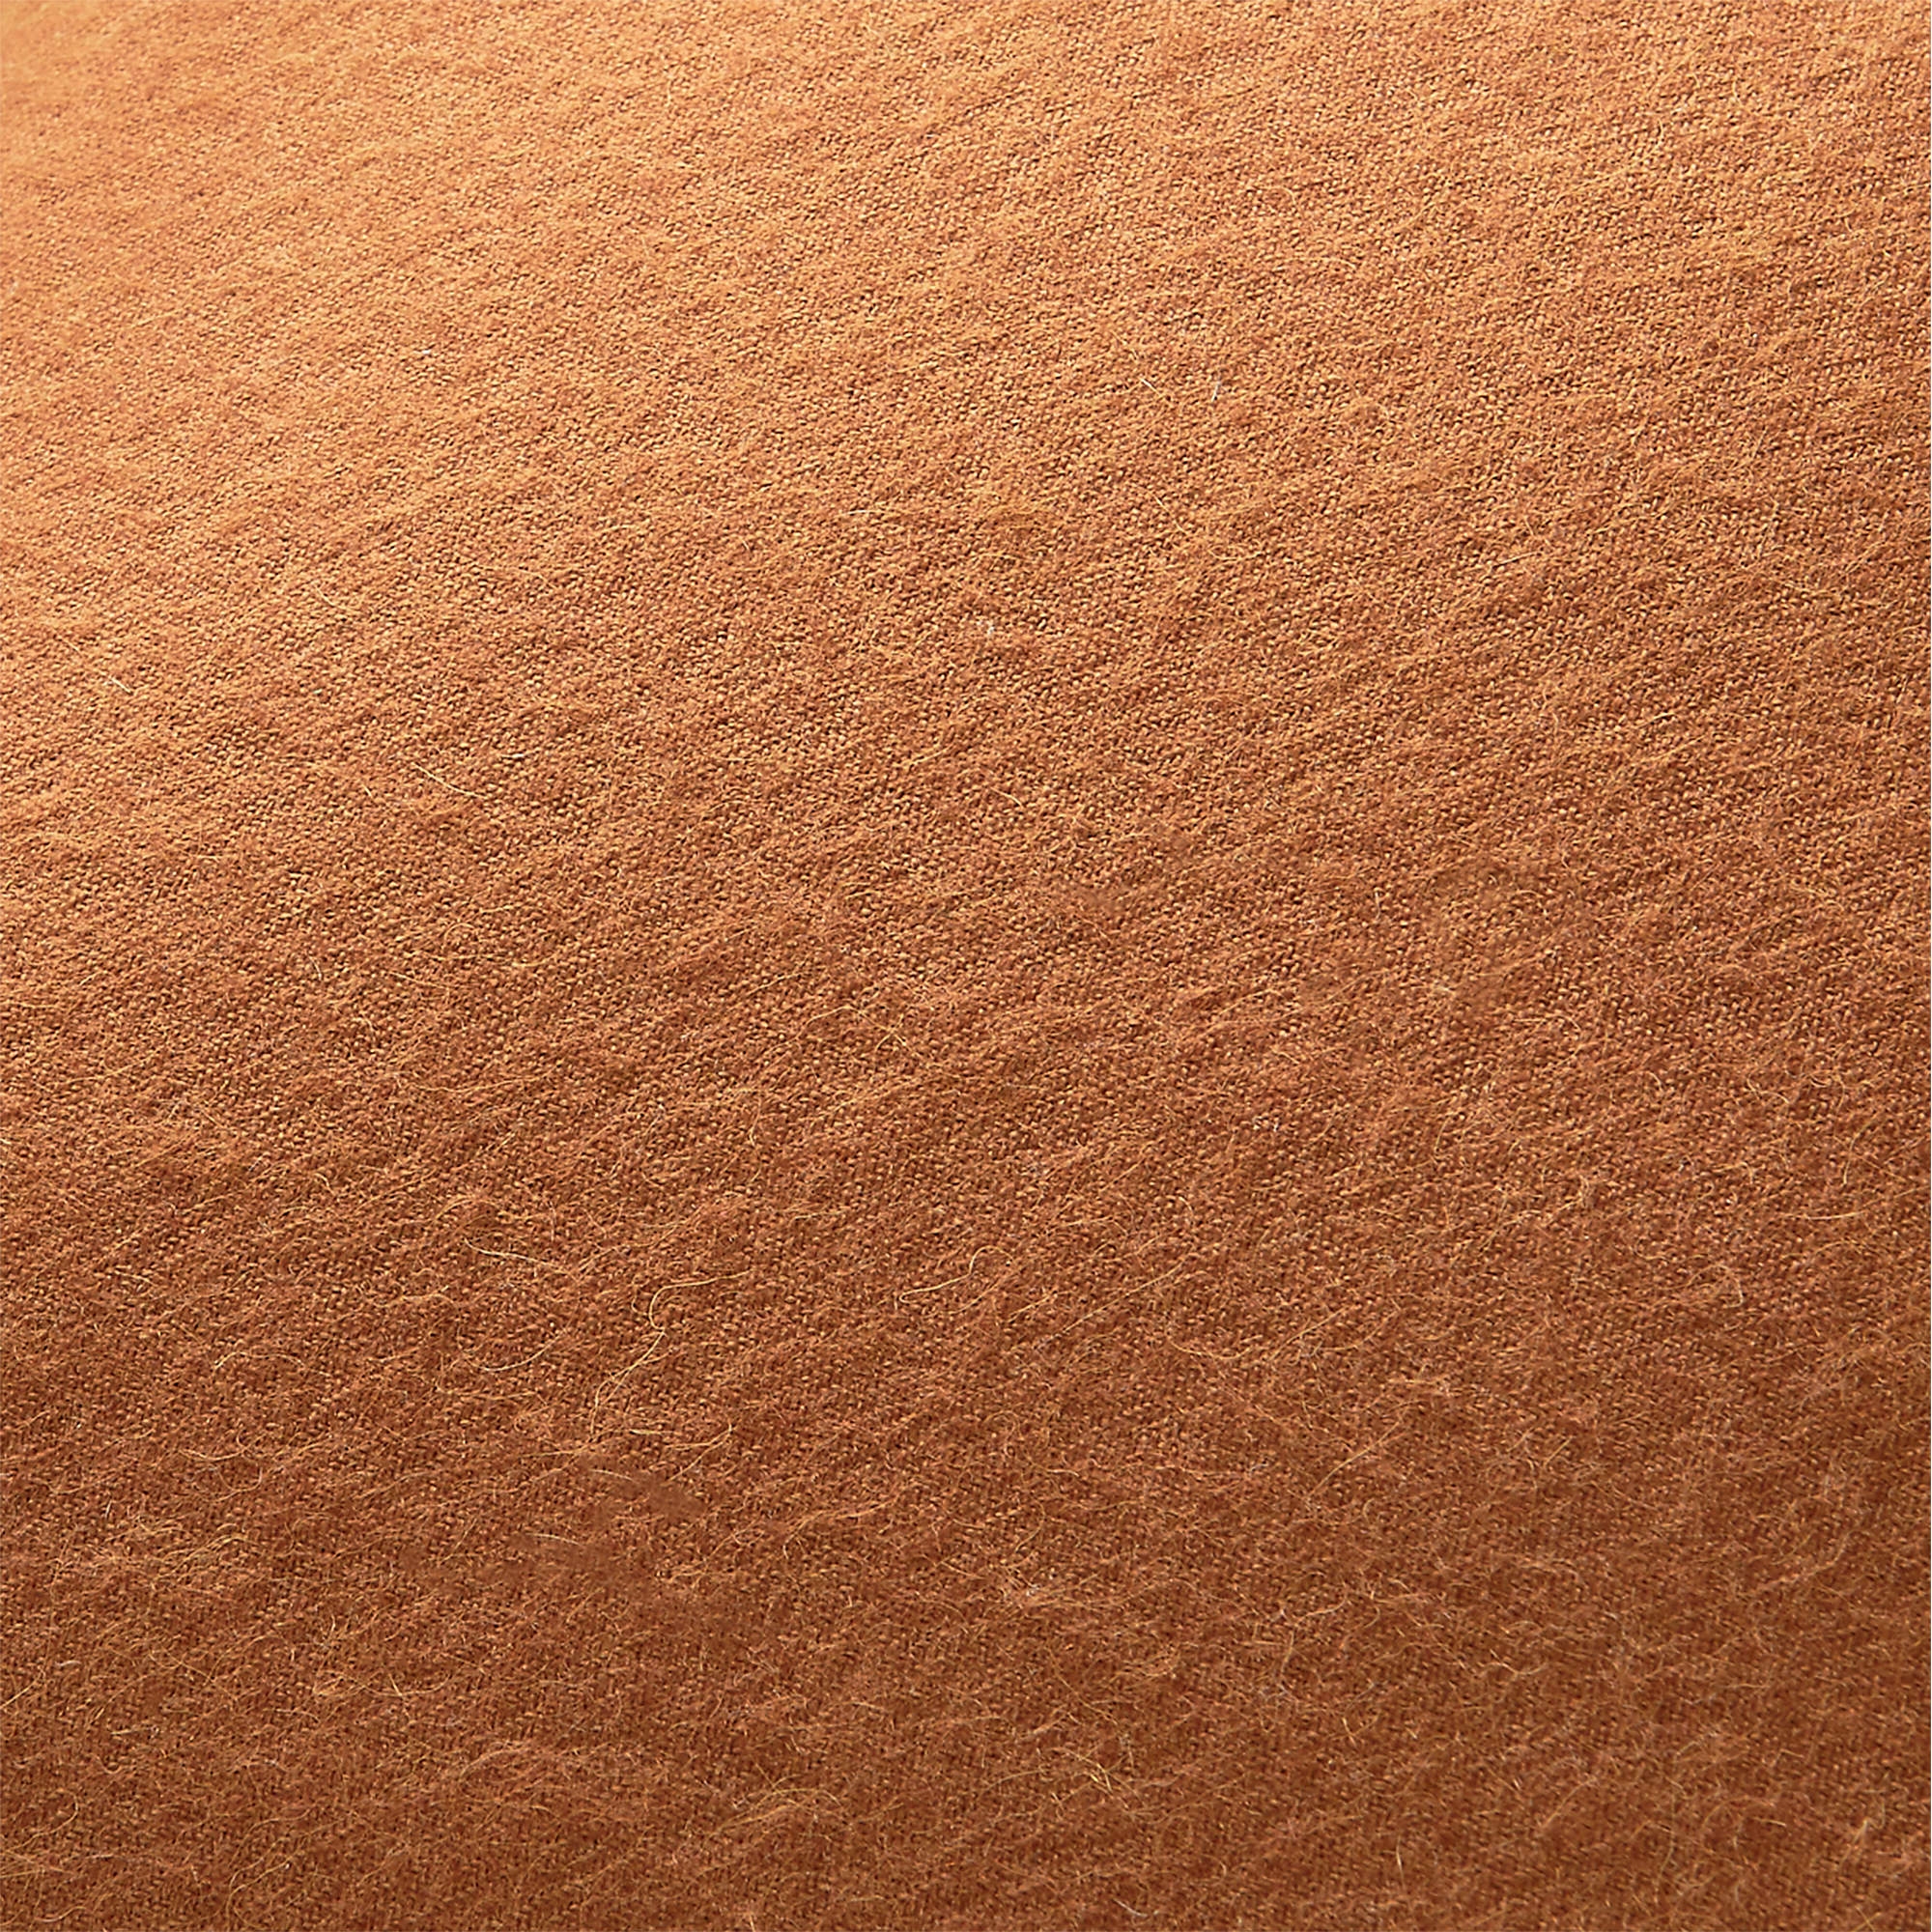 Alpaca Copper Pillow with Down-Alternative Insert, 20" x 20" - Image 3